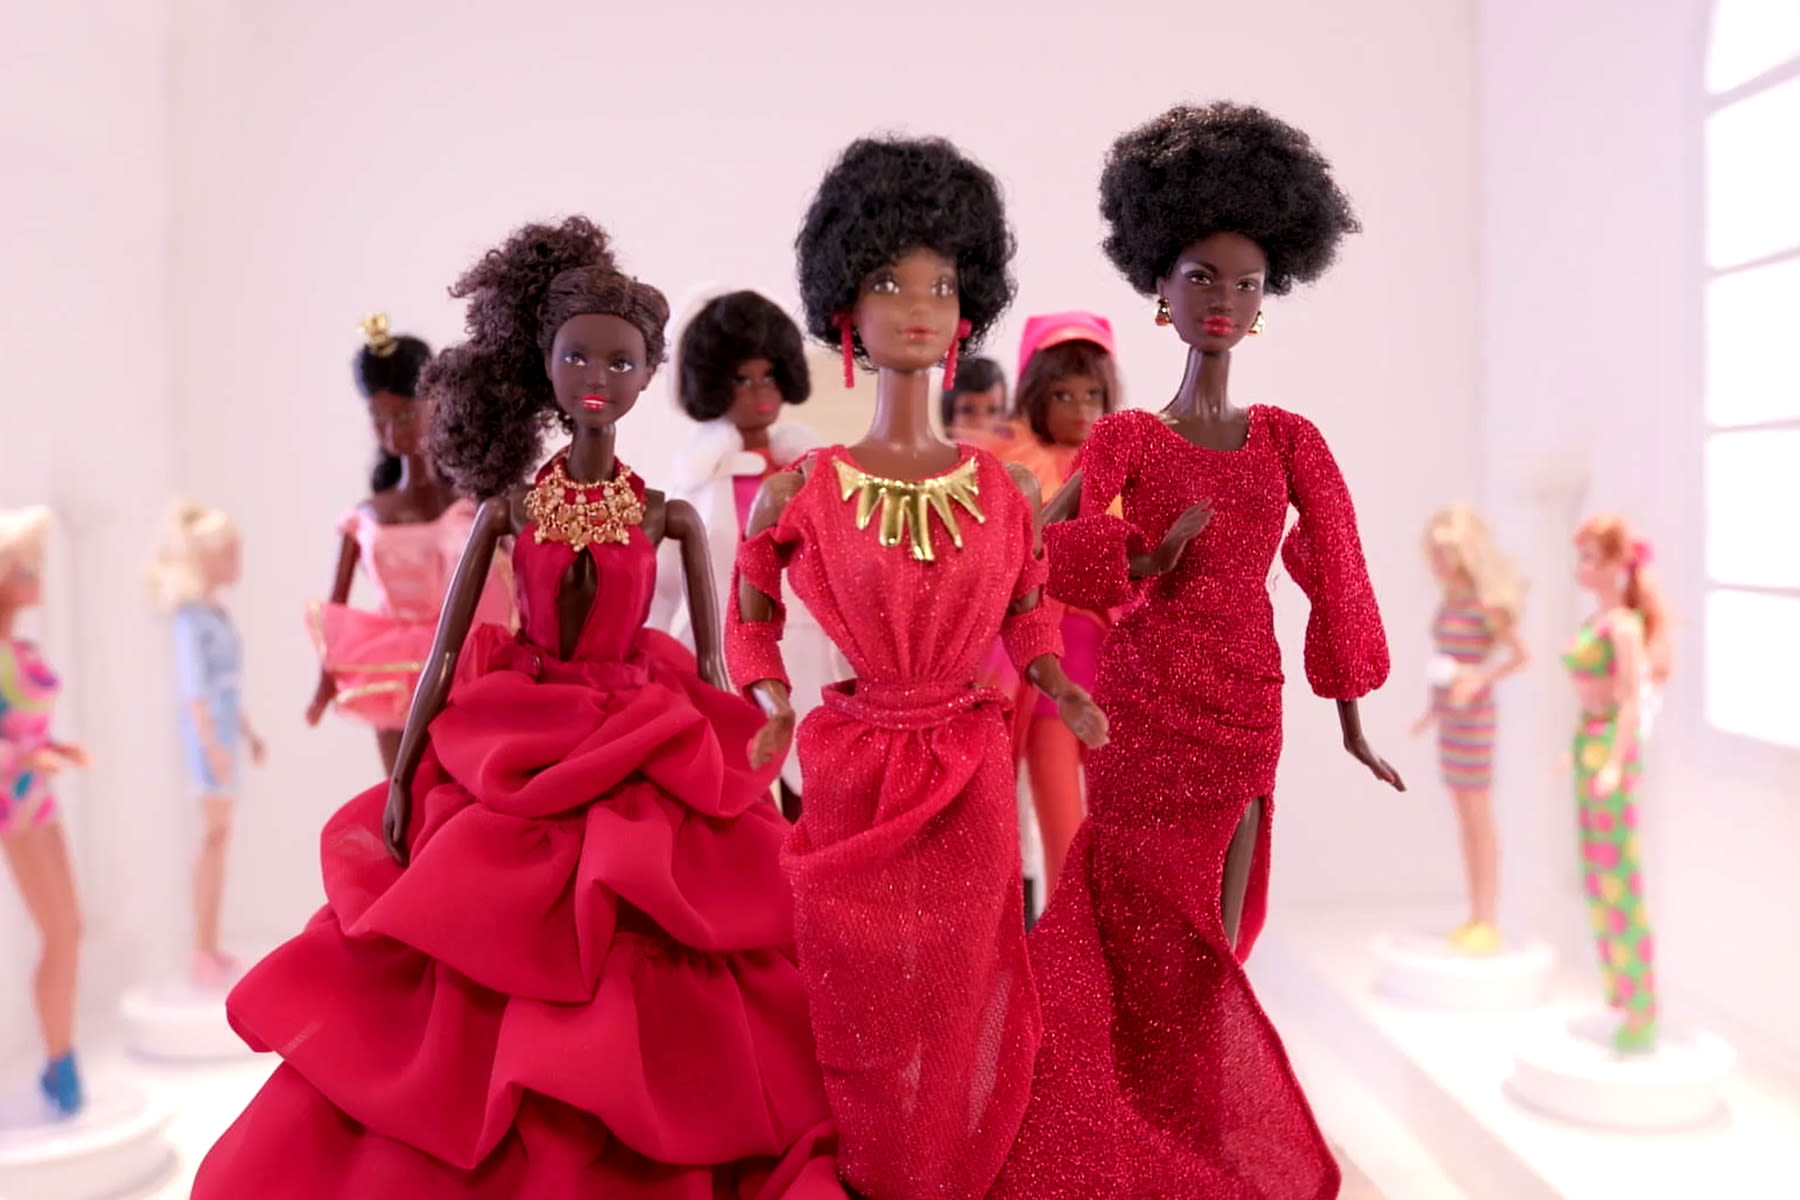 ‘Black Barbie’ Trailer Explores How Three Black Women Revolutionized the Doll Brand